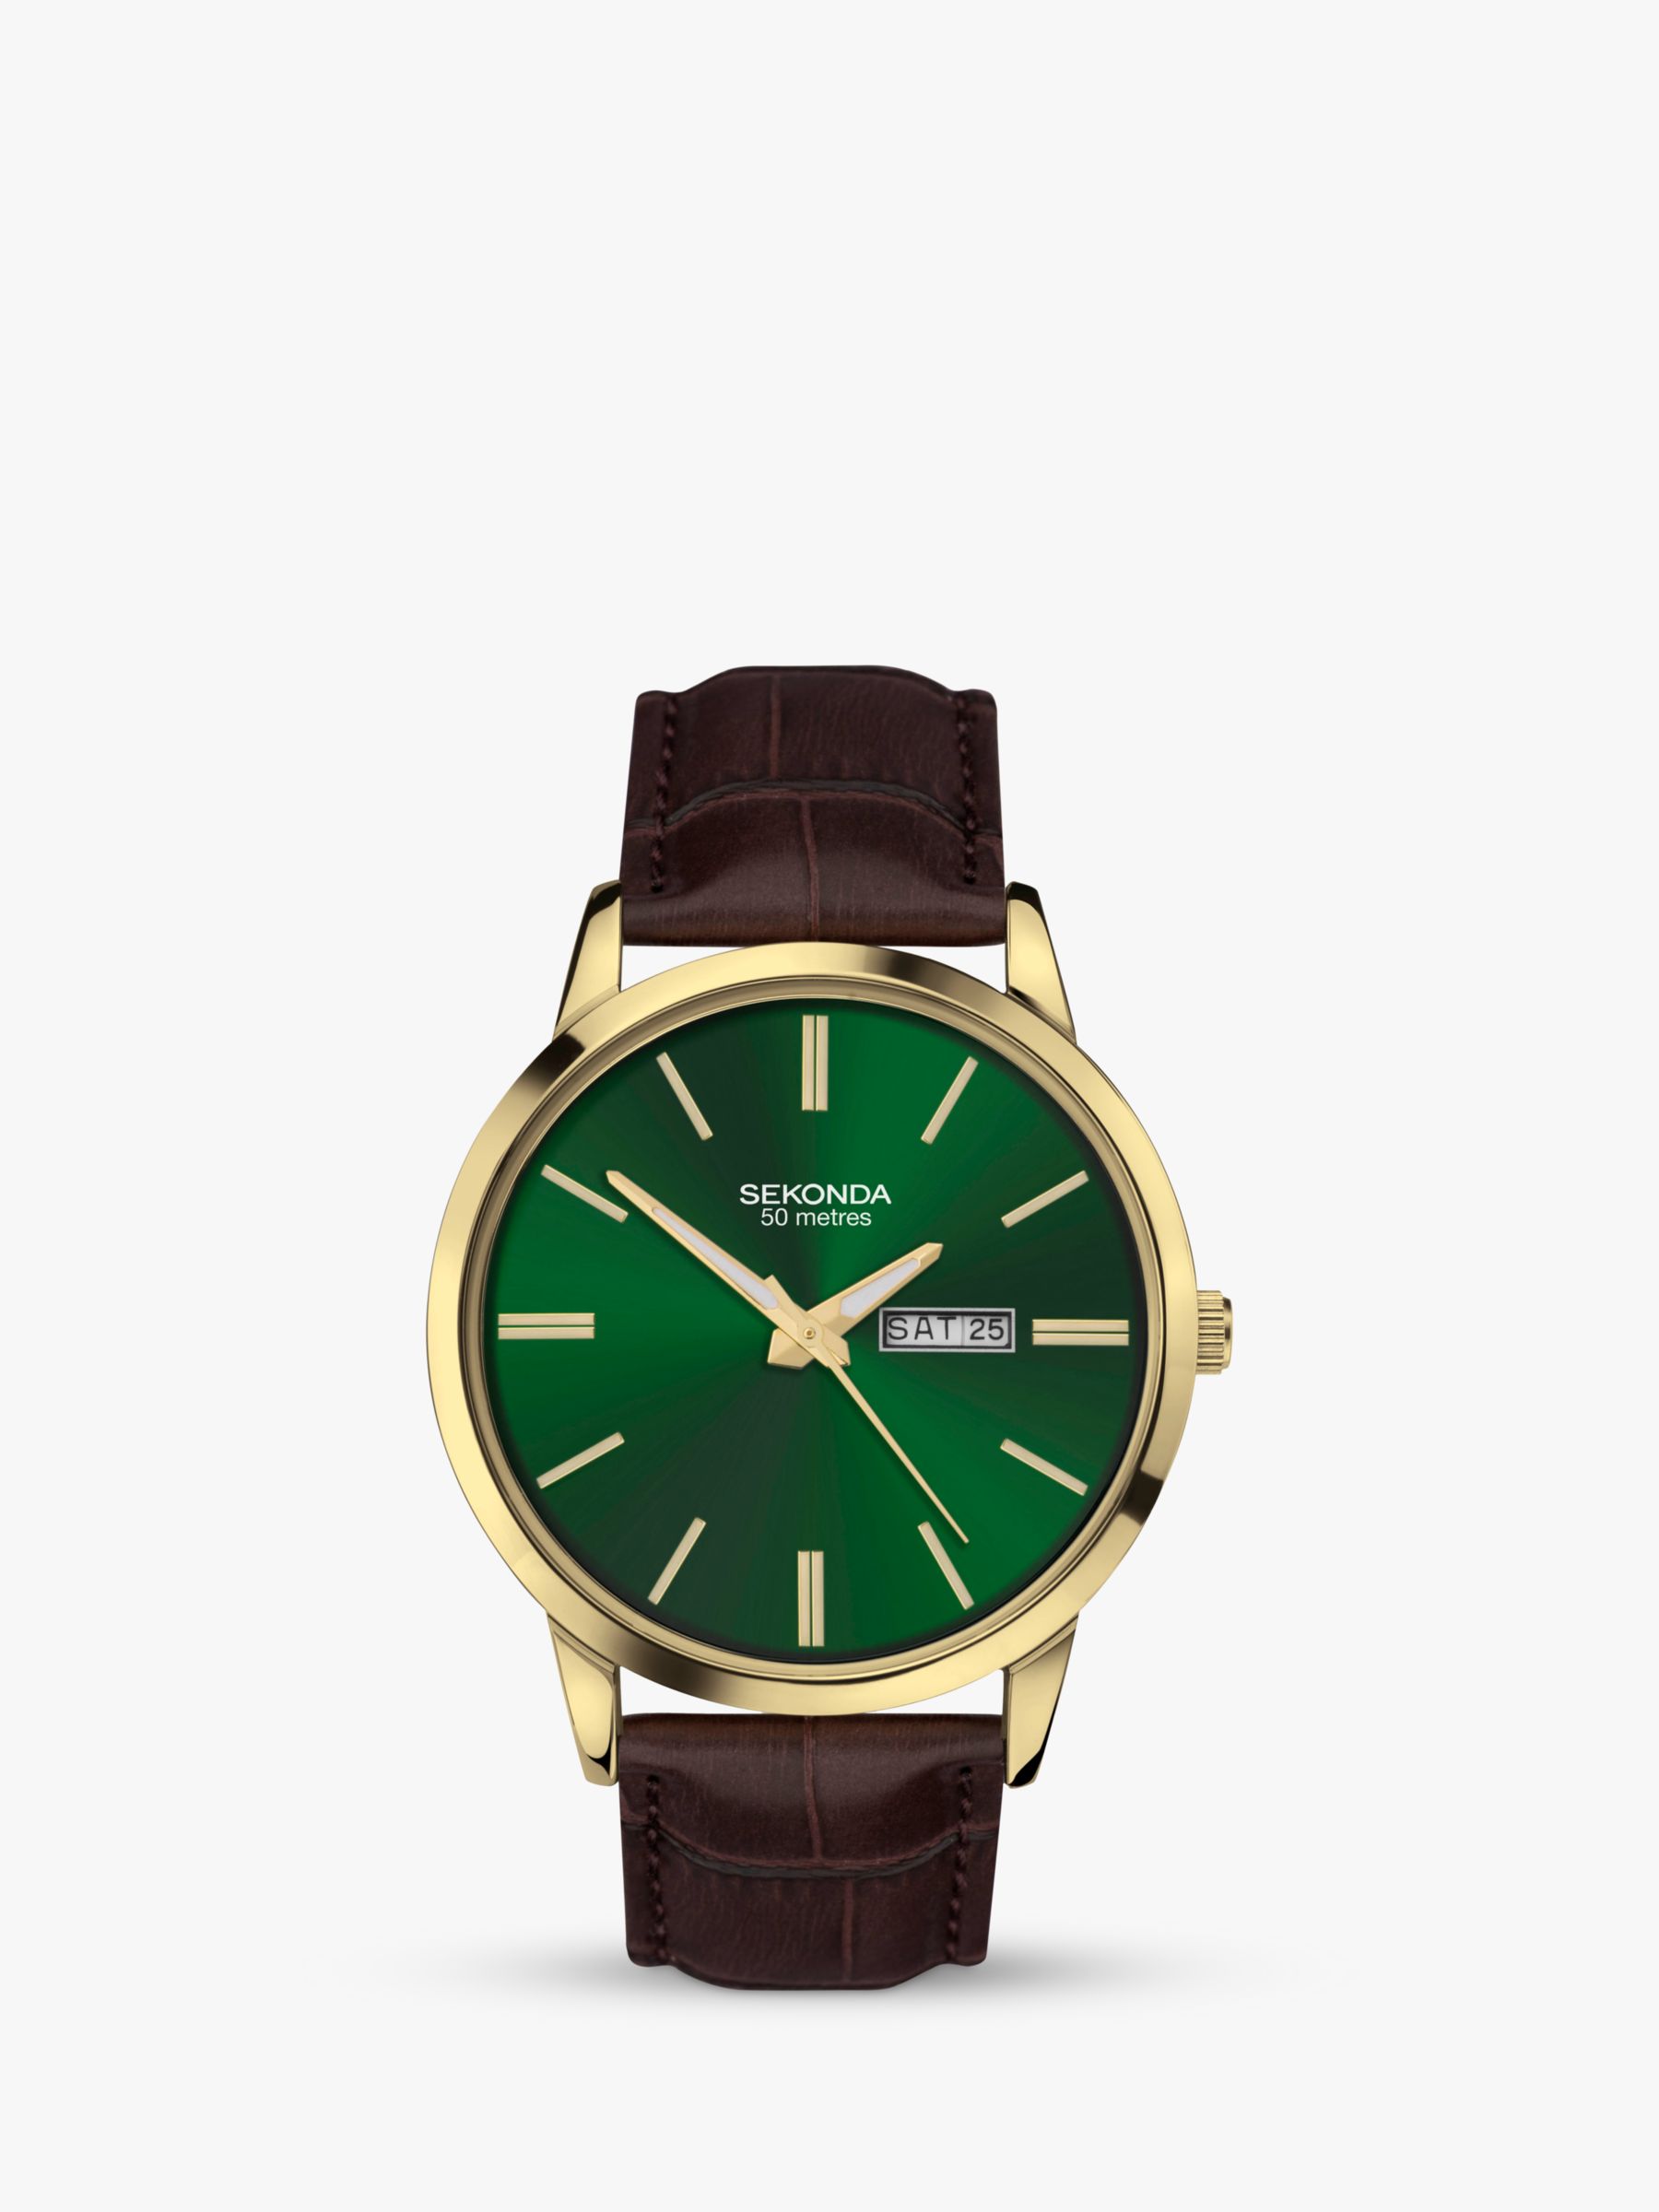 Sekonda 30151 Men's Jackson Day Date Leather Strap Watch, Brown/Green £49.99